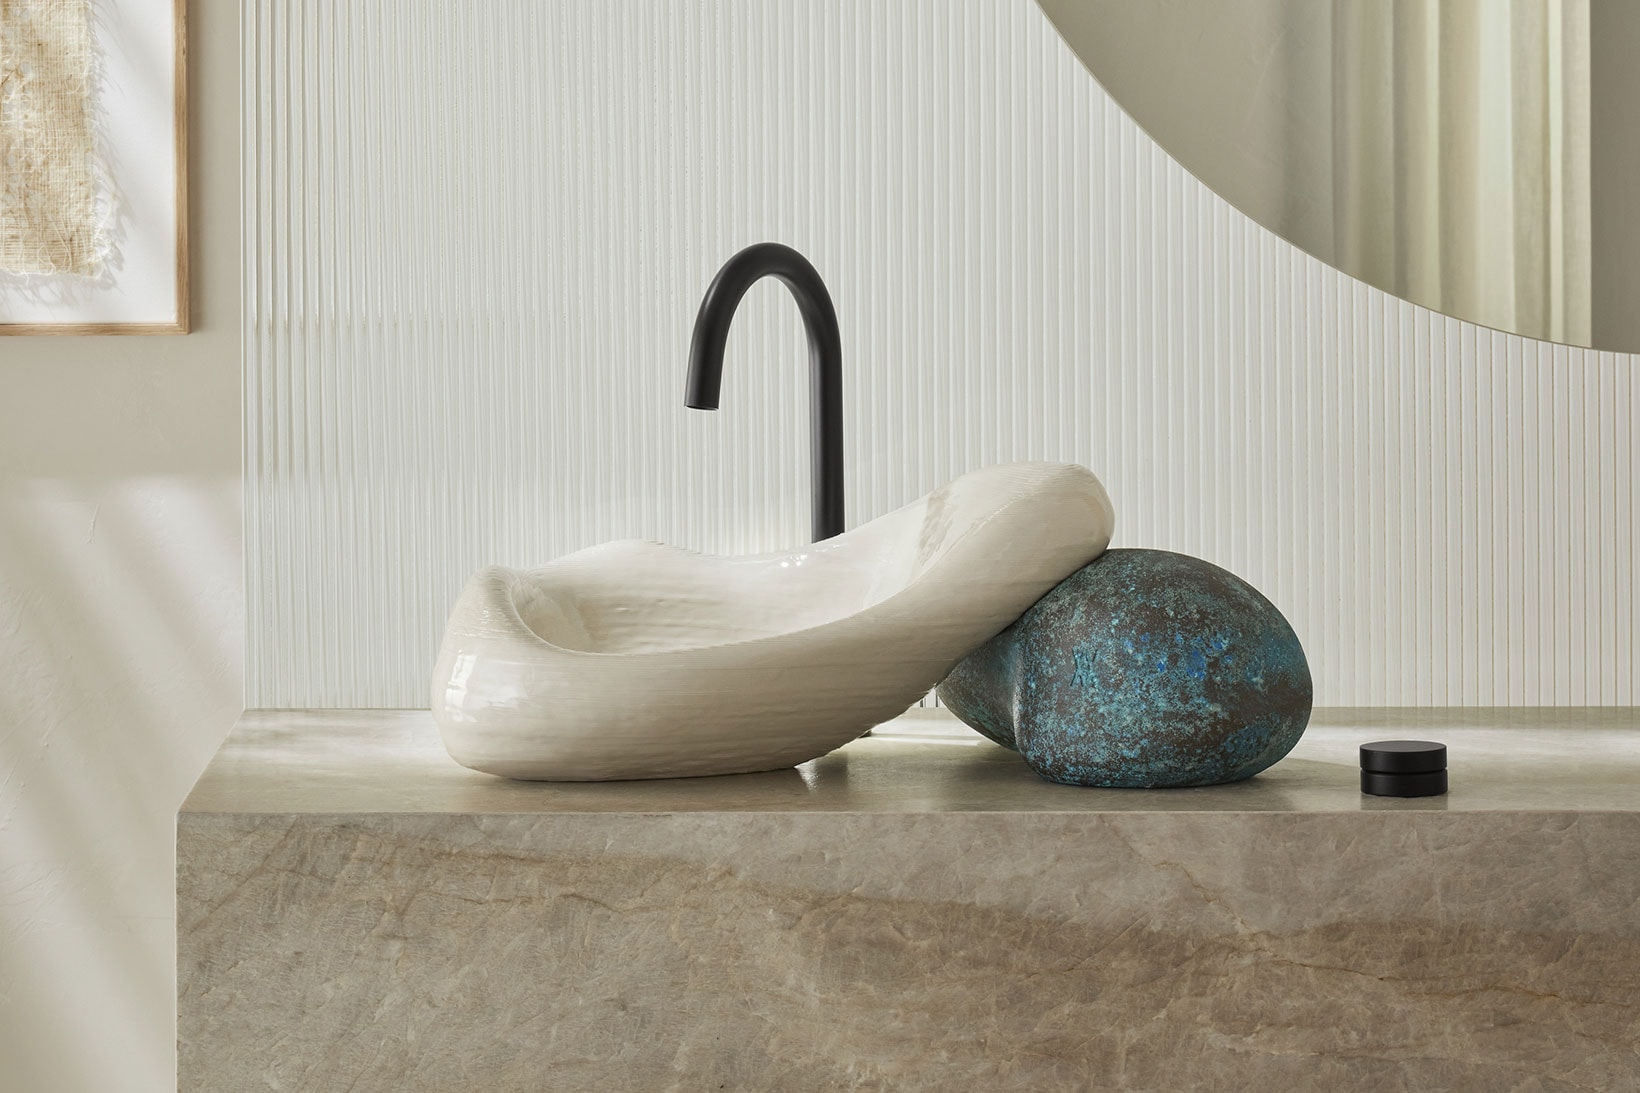 Daniel Arsham Kohler Rock.01 3D-Printed Bathroom Sink Design